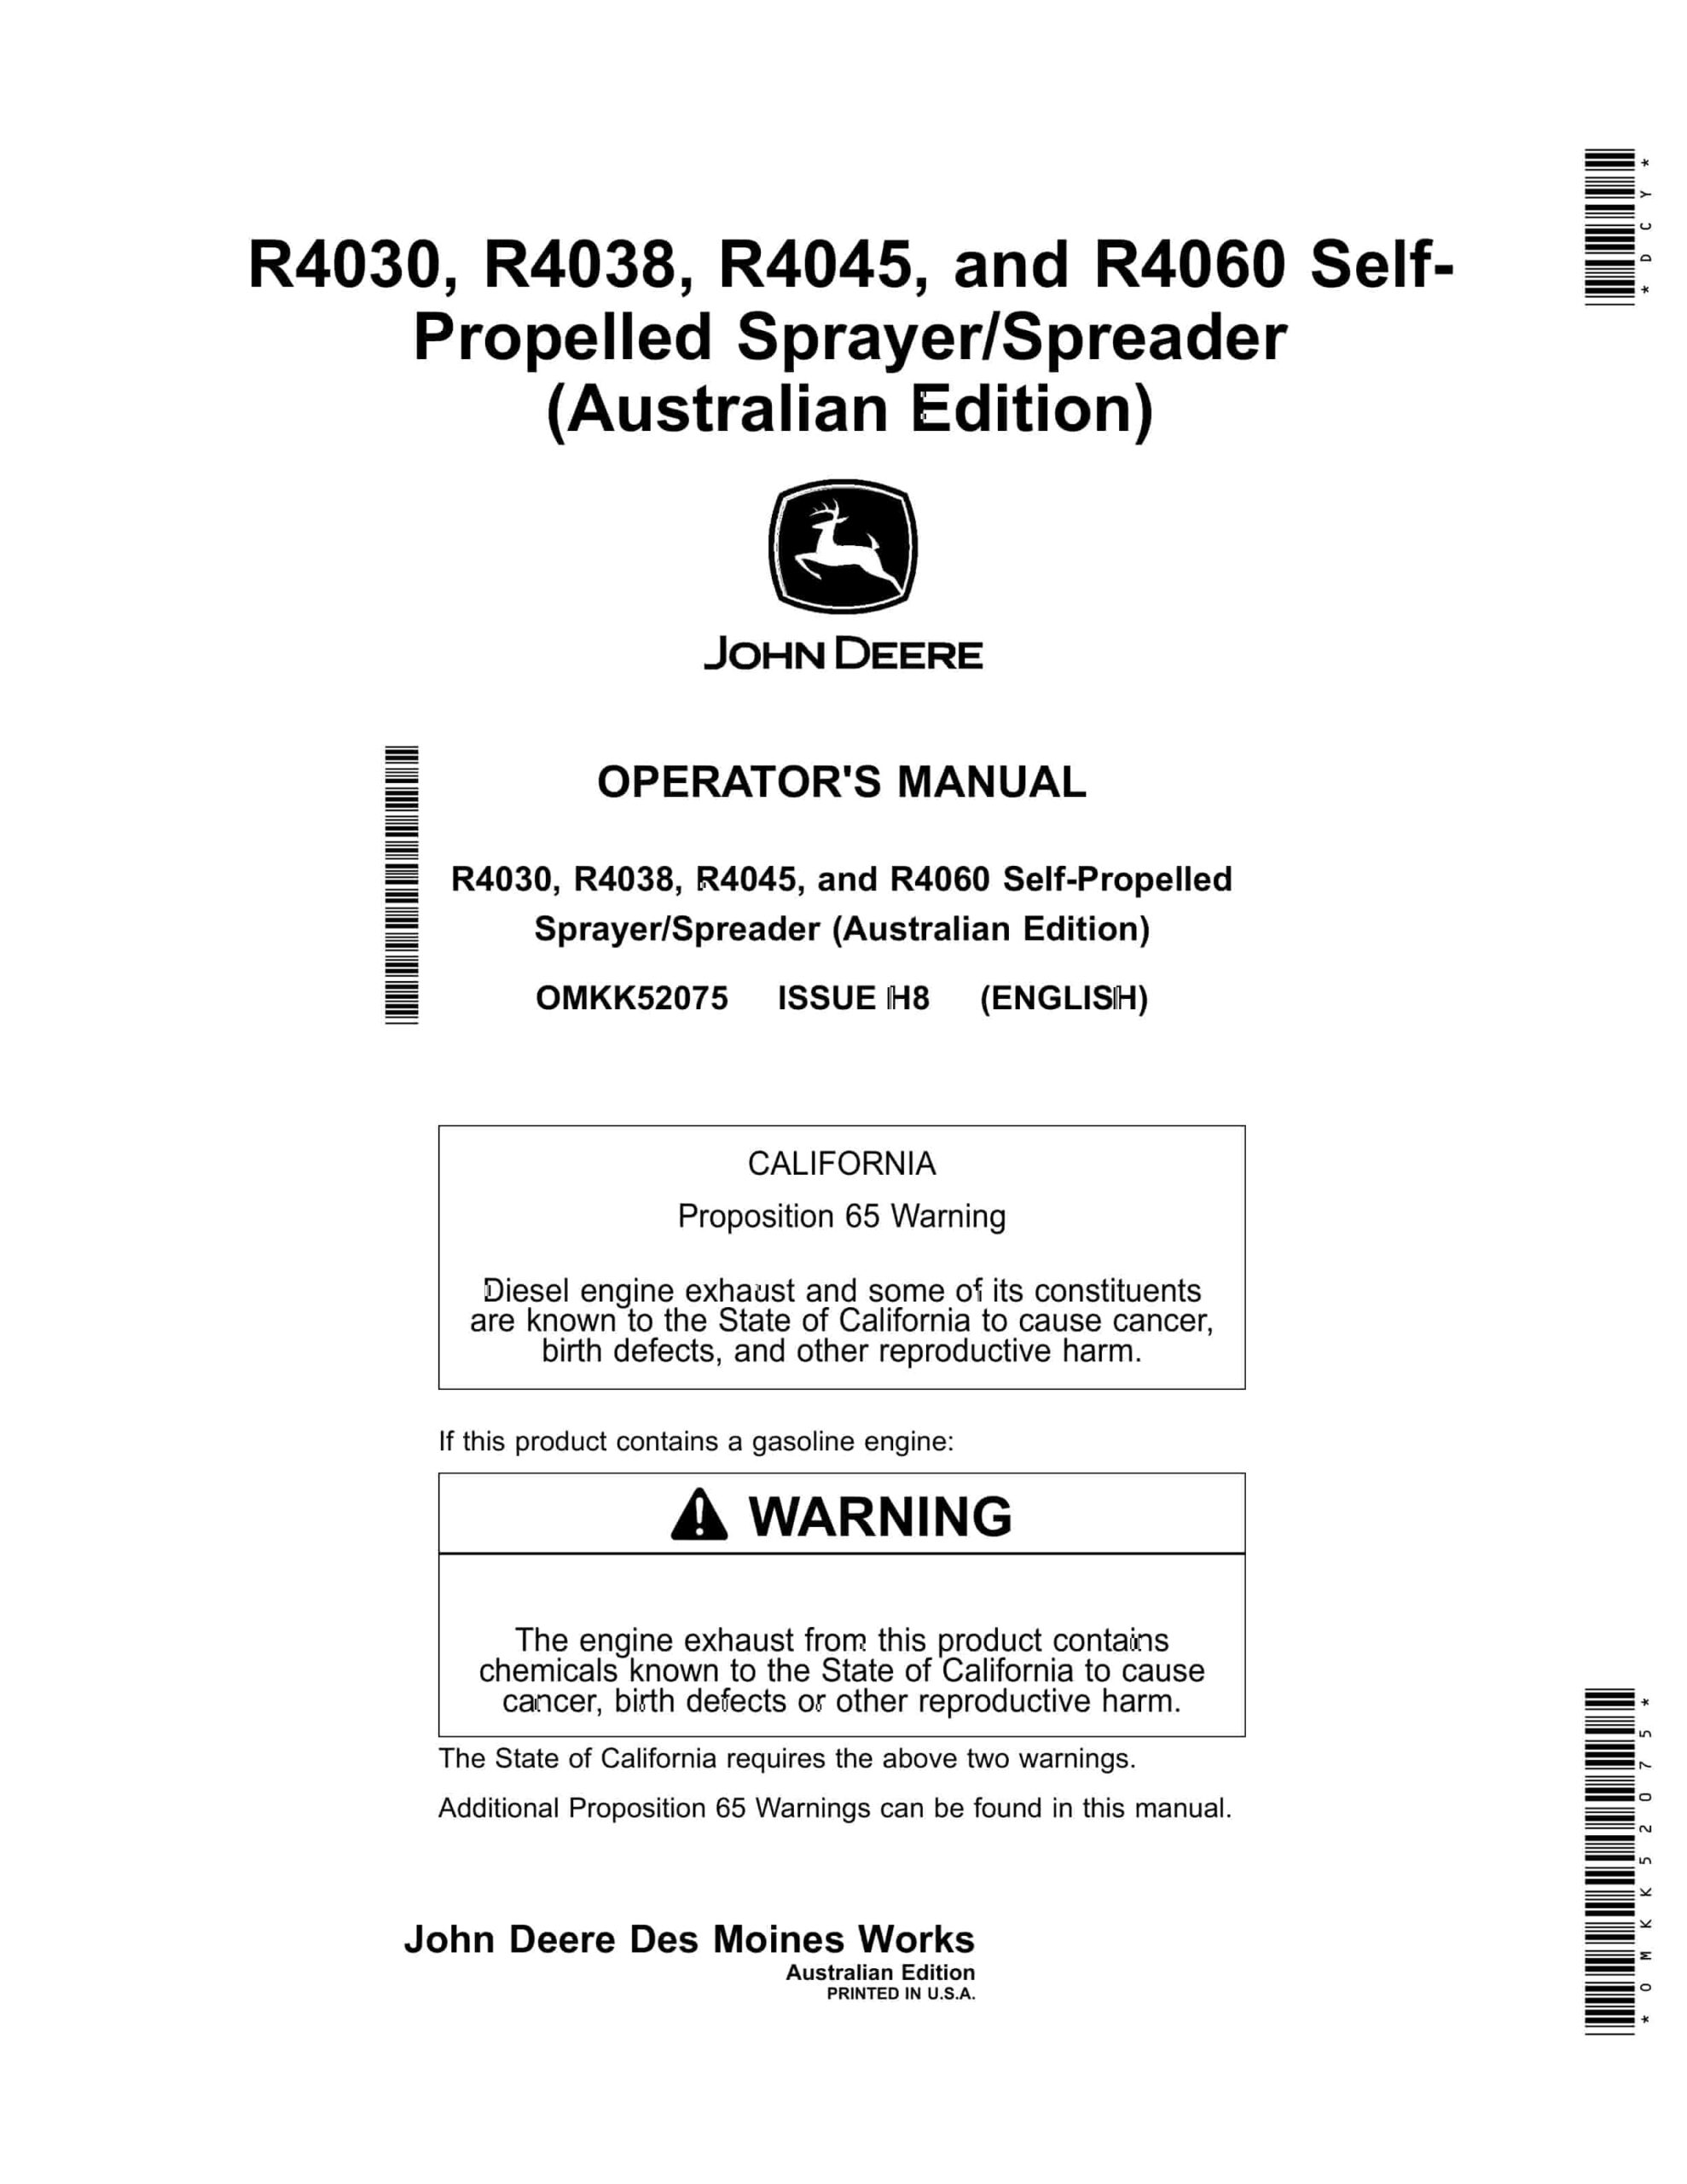 John Deere R4030, R4038, R4045, and R4060 Self Propelled Sprayer Spreader Operator Manual OMKK52075-1